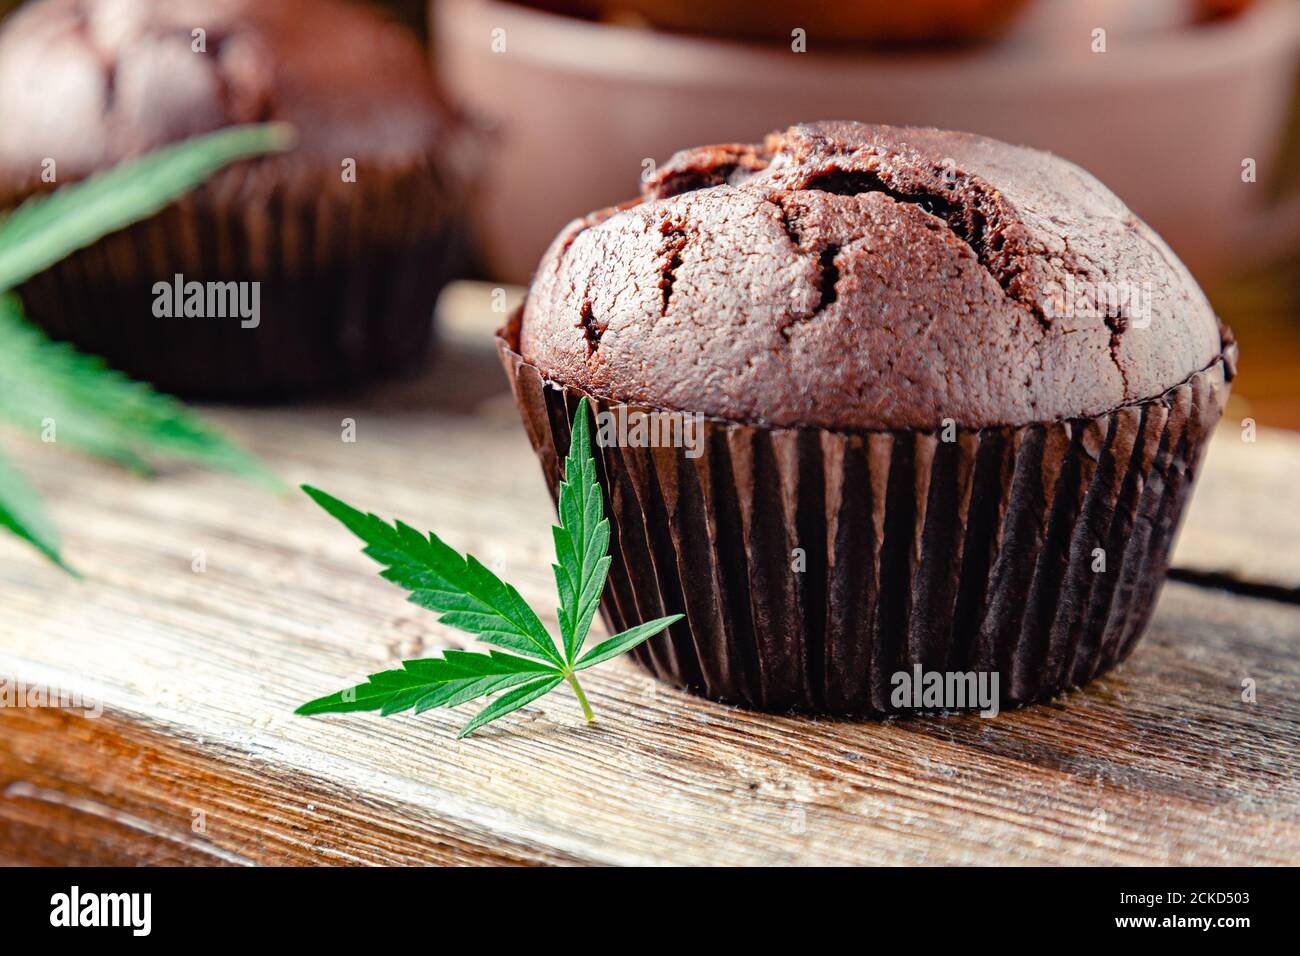 Cupcake with marijuana. Chocolate cupcake muffins with cannabis weed cbd. Medical marijuana drugs in food dessert, ganja legalization. Cooking baking Stock Photo